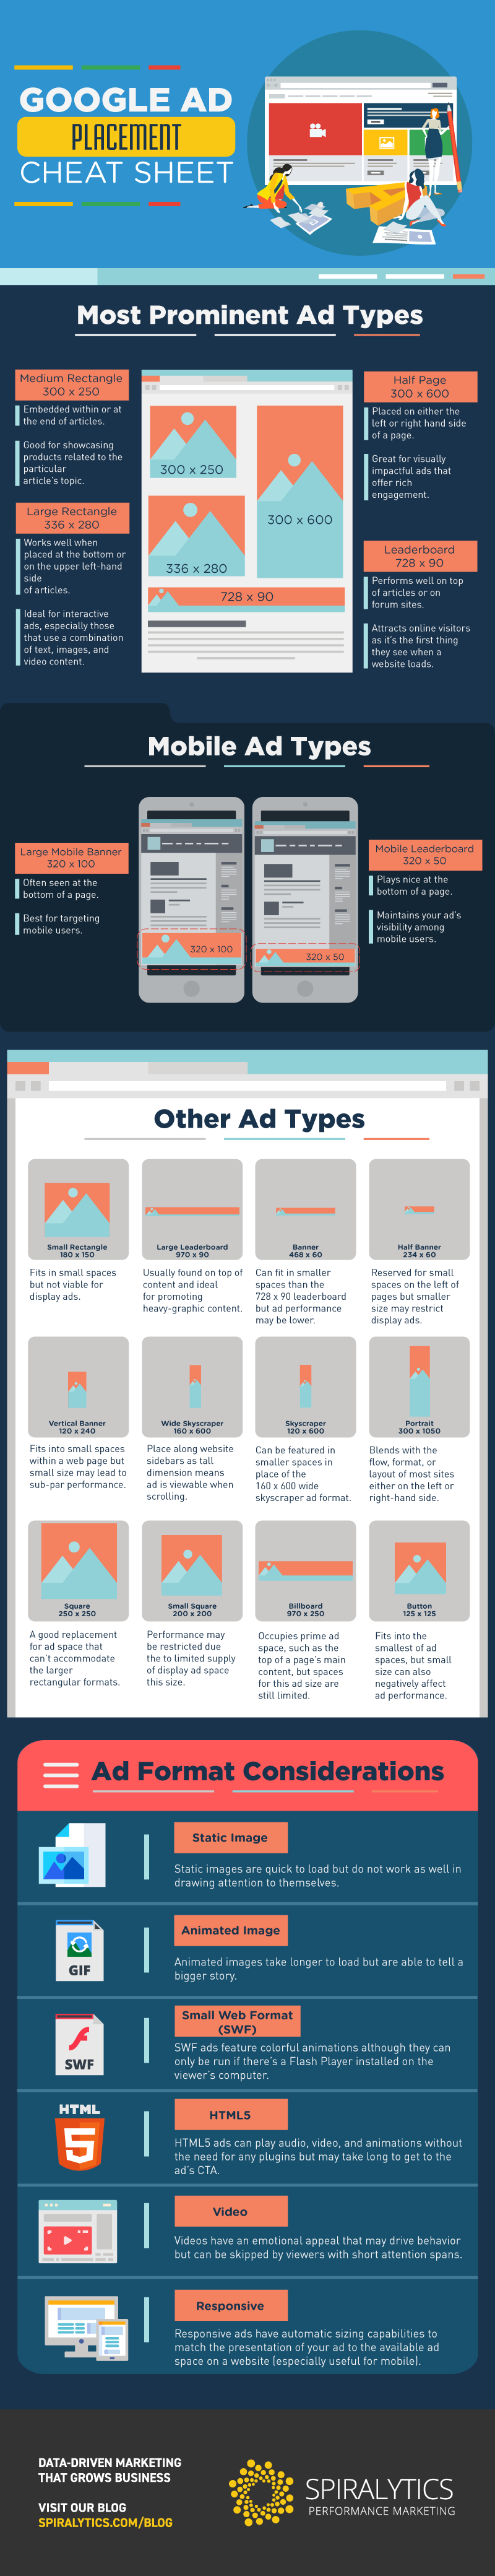 Spiralytics Info2-Google Ad Placement-Infographic